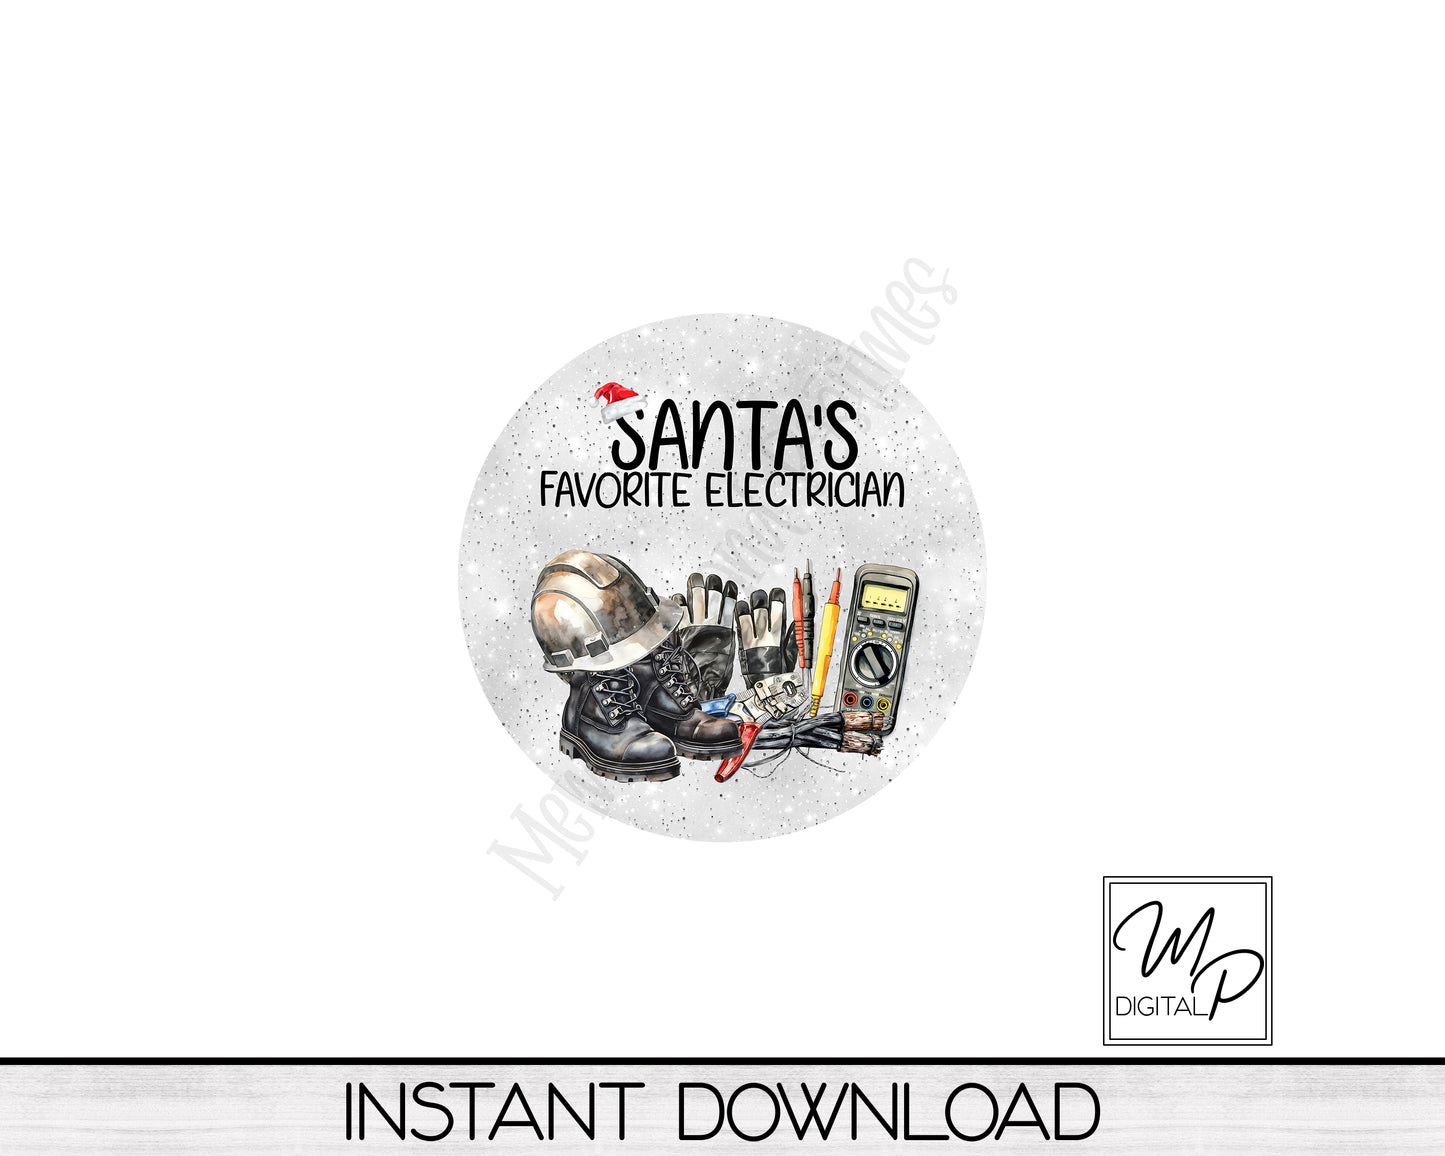 Santa's Favorite Electrician Round Ornament PNG Digital Download for Sublimation